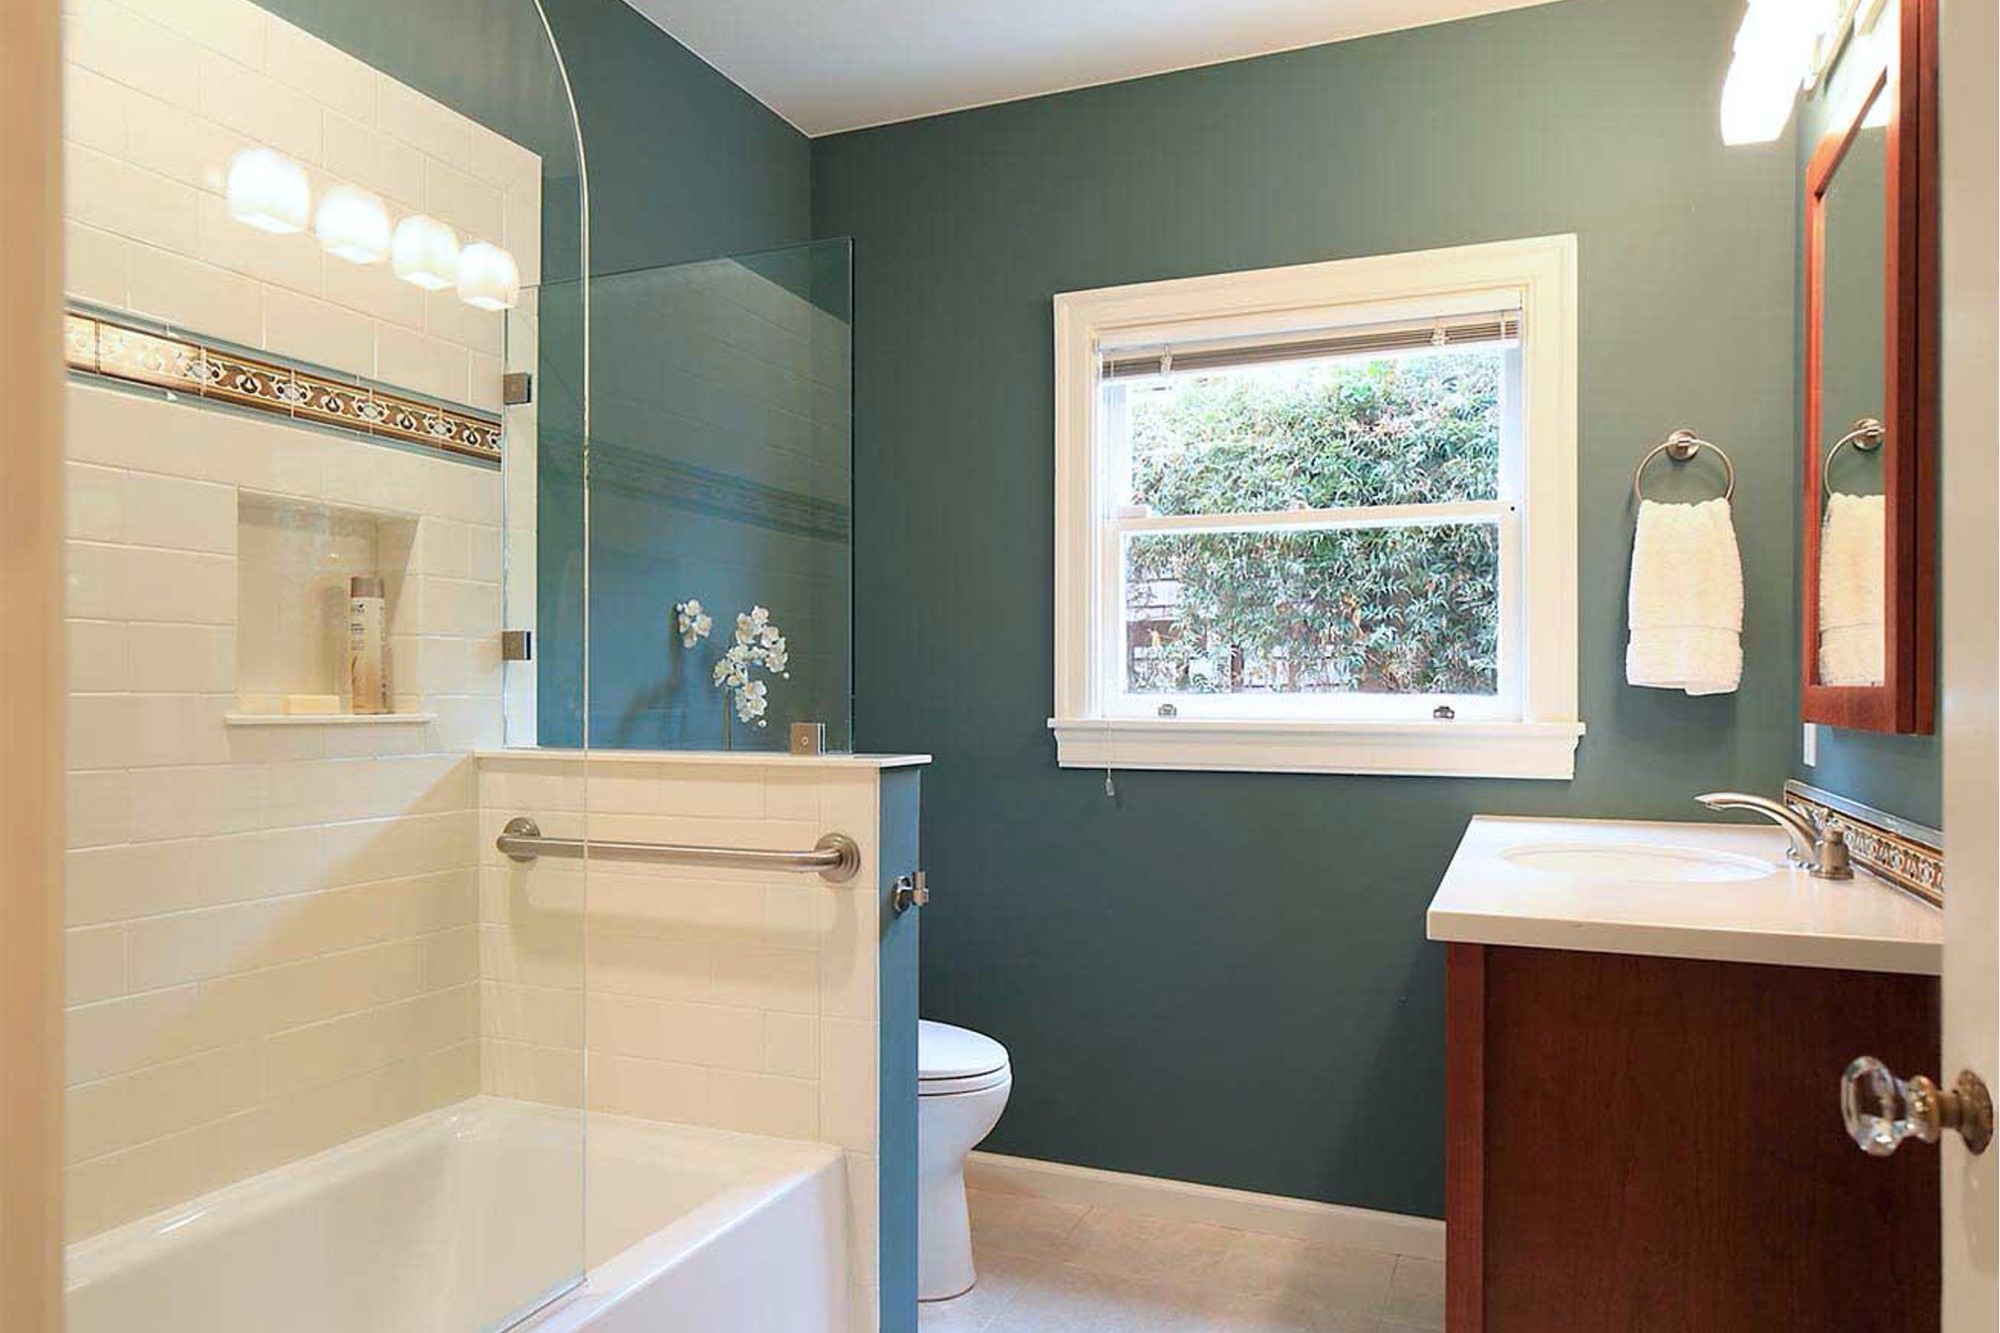 5 Star Master Bath Backsplash Designs and Trends in the East Bay - Bathroom Design East Bay - Bathroom Renovation - Custom Kitchens